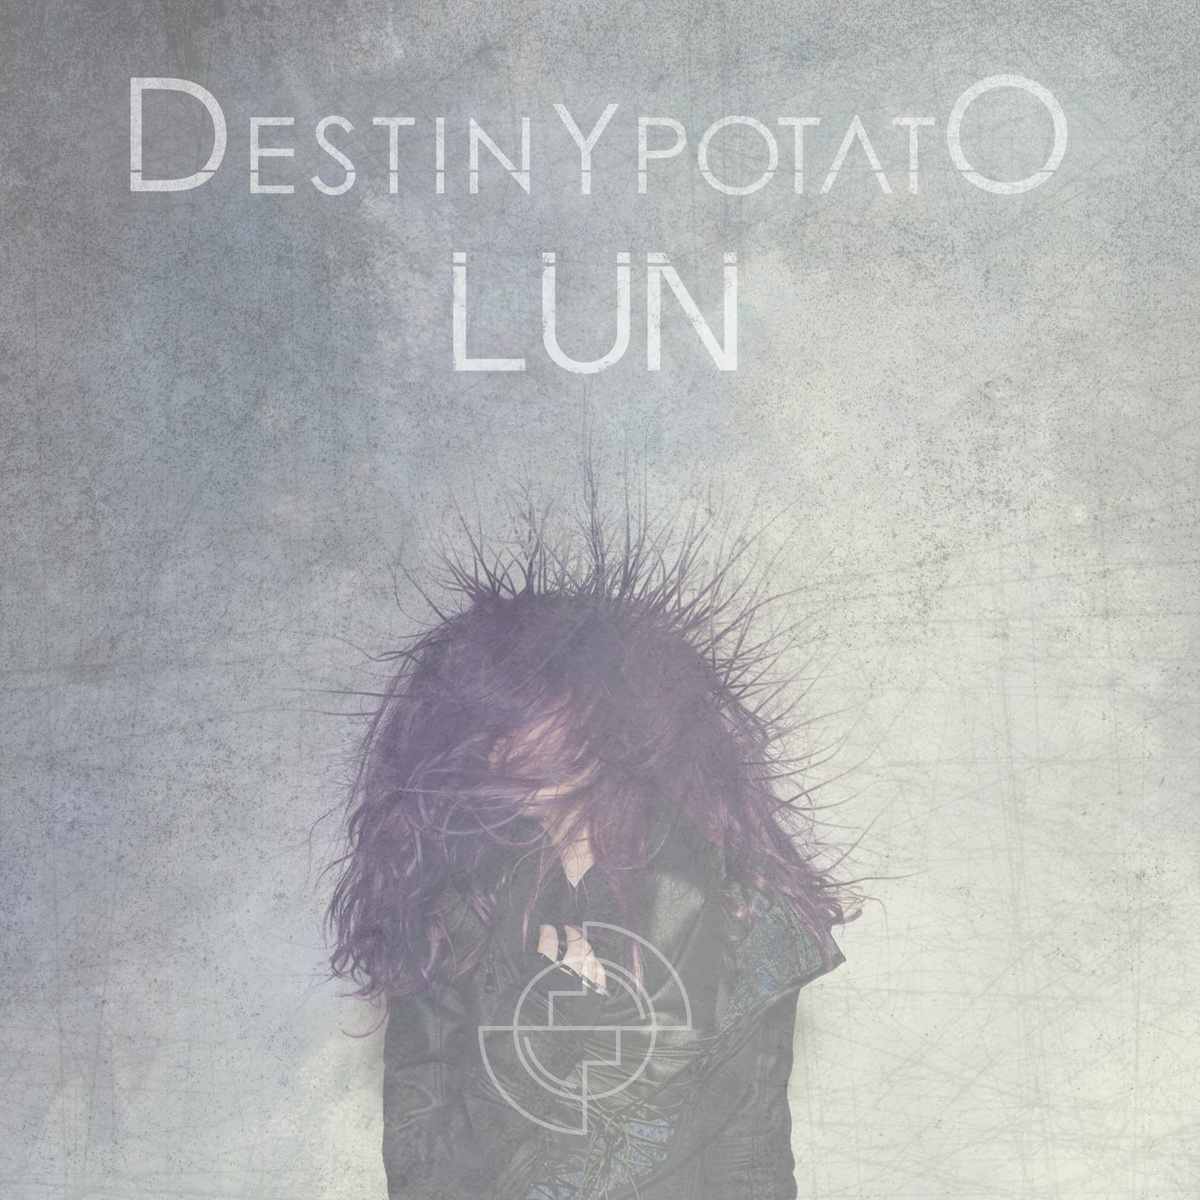 Destiny-Potato-Lun-album-art